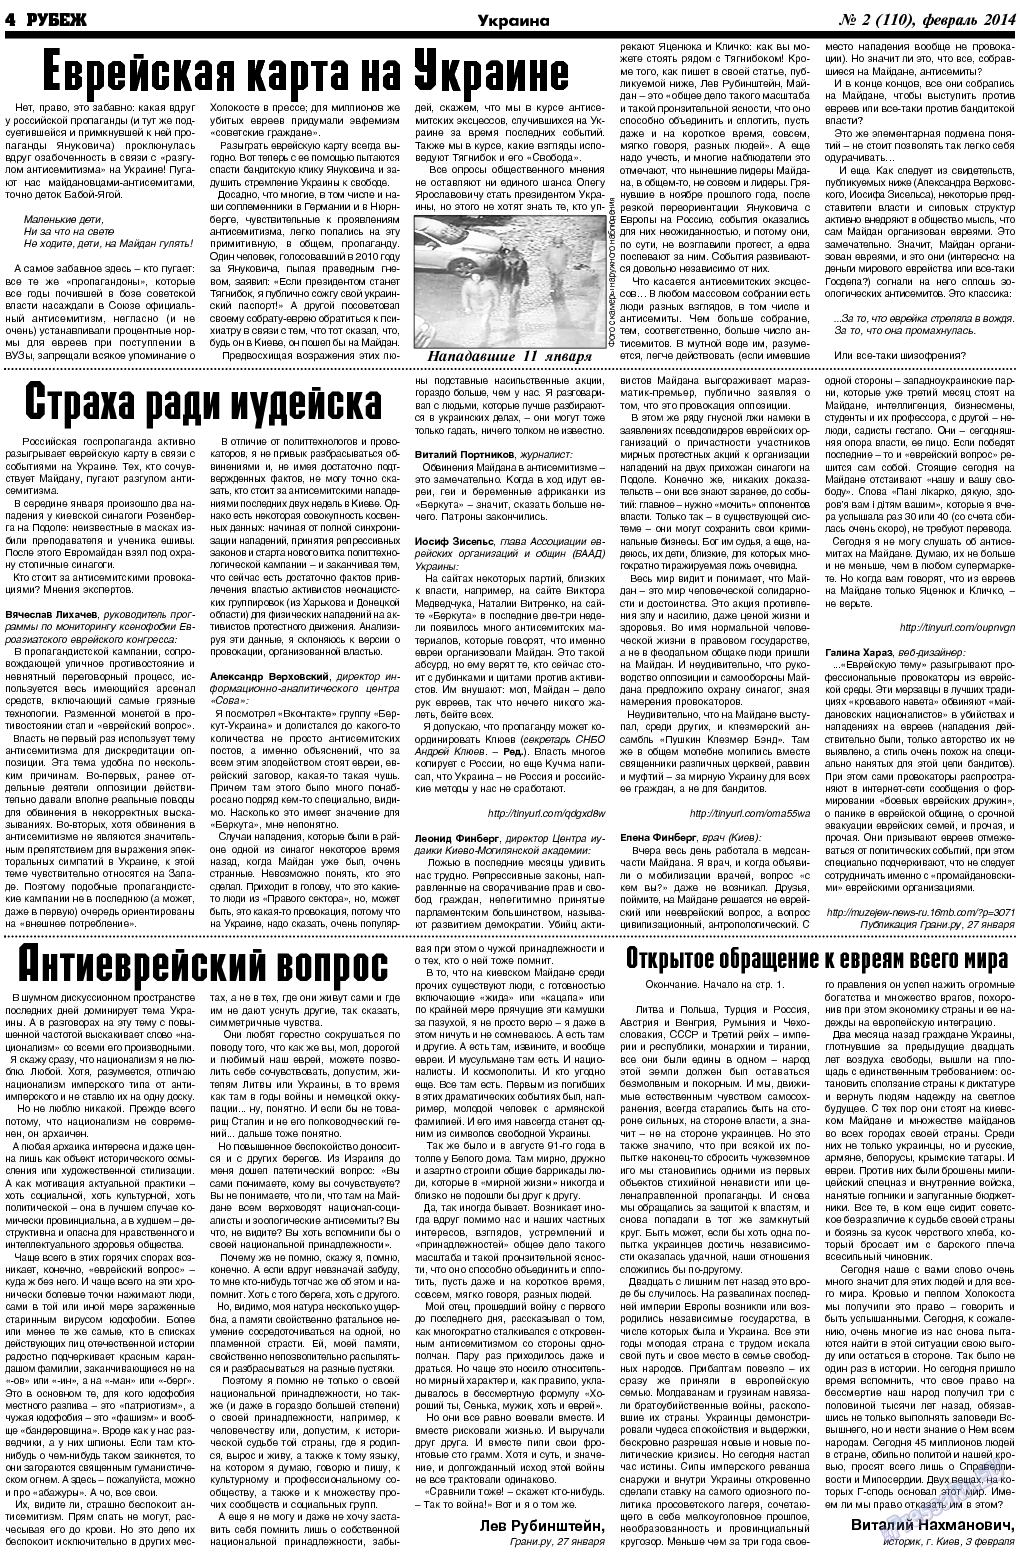 Рубеж, газета. 2014 №2 стр.4